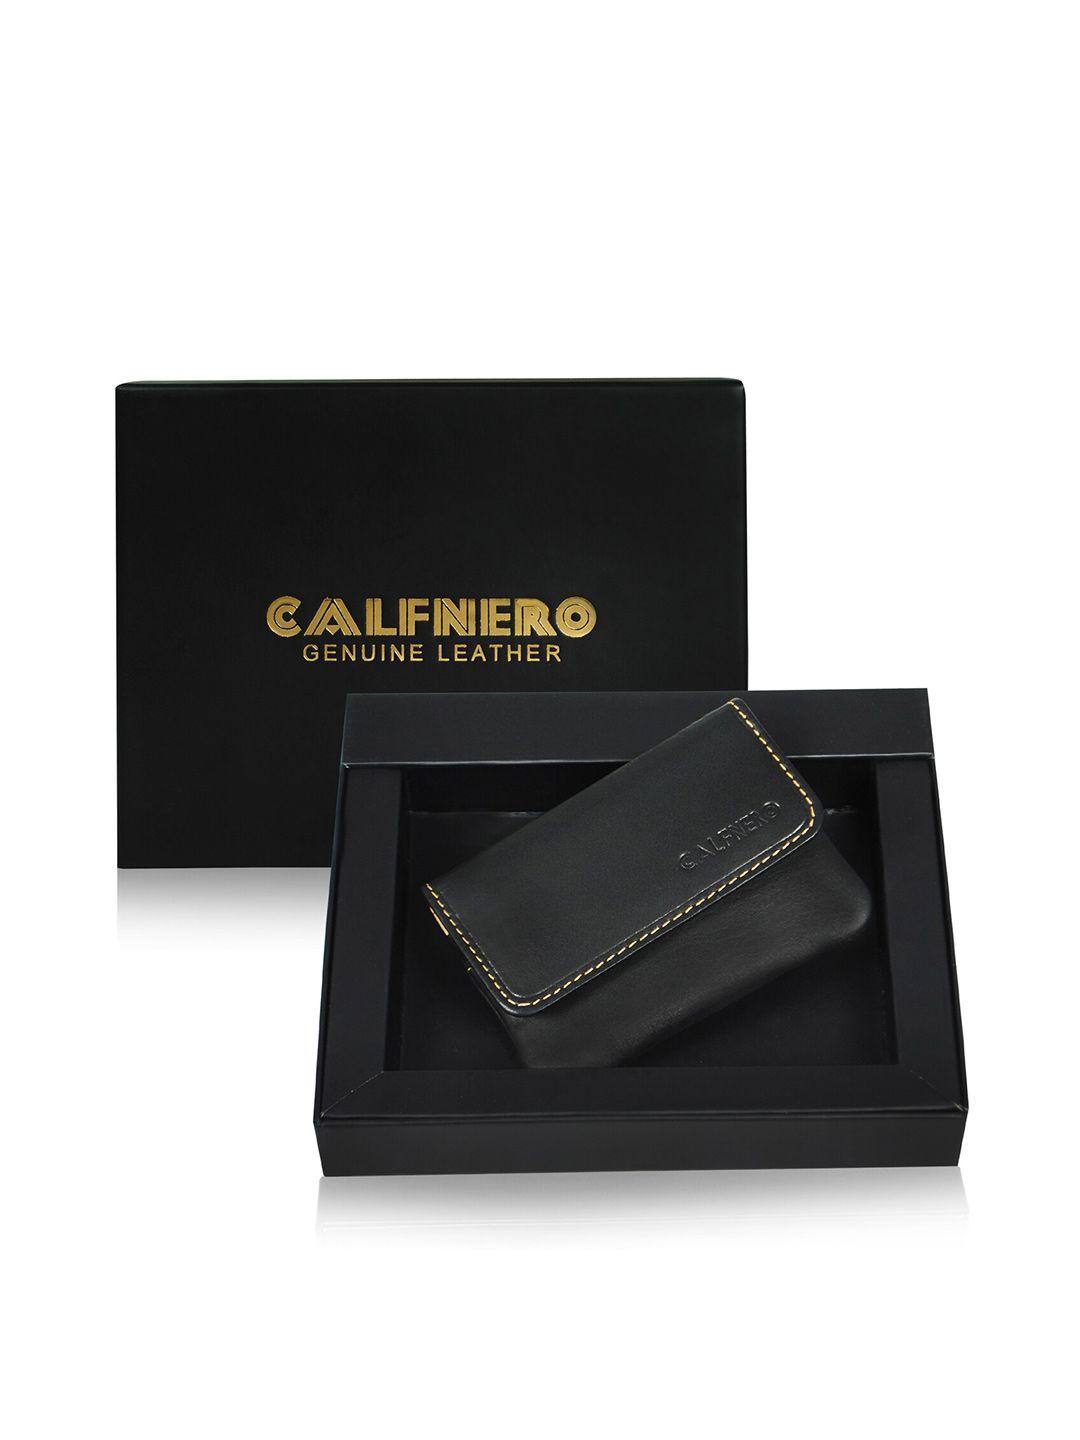 calfnero unisex black leather envelope